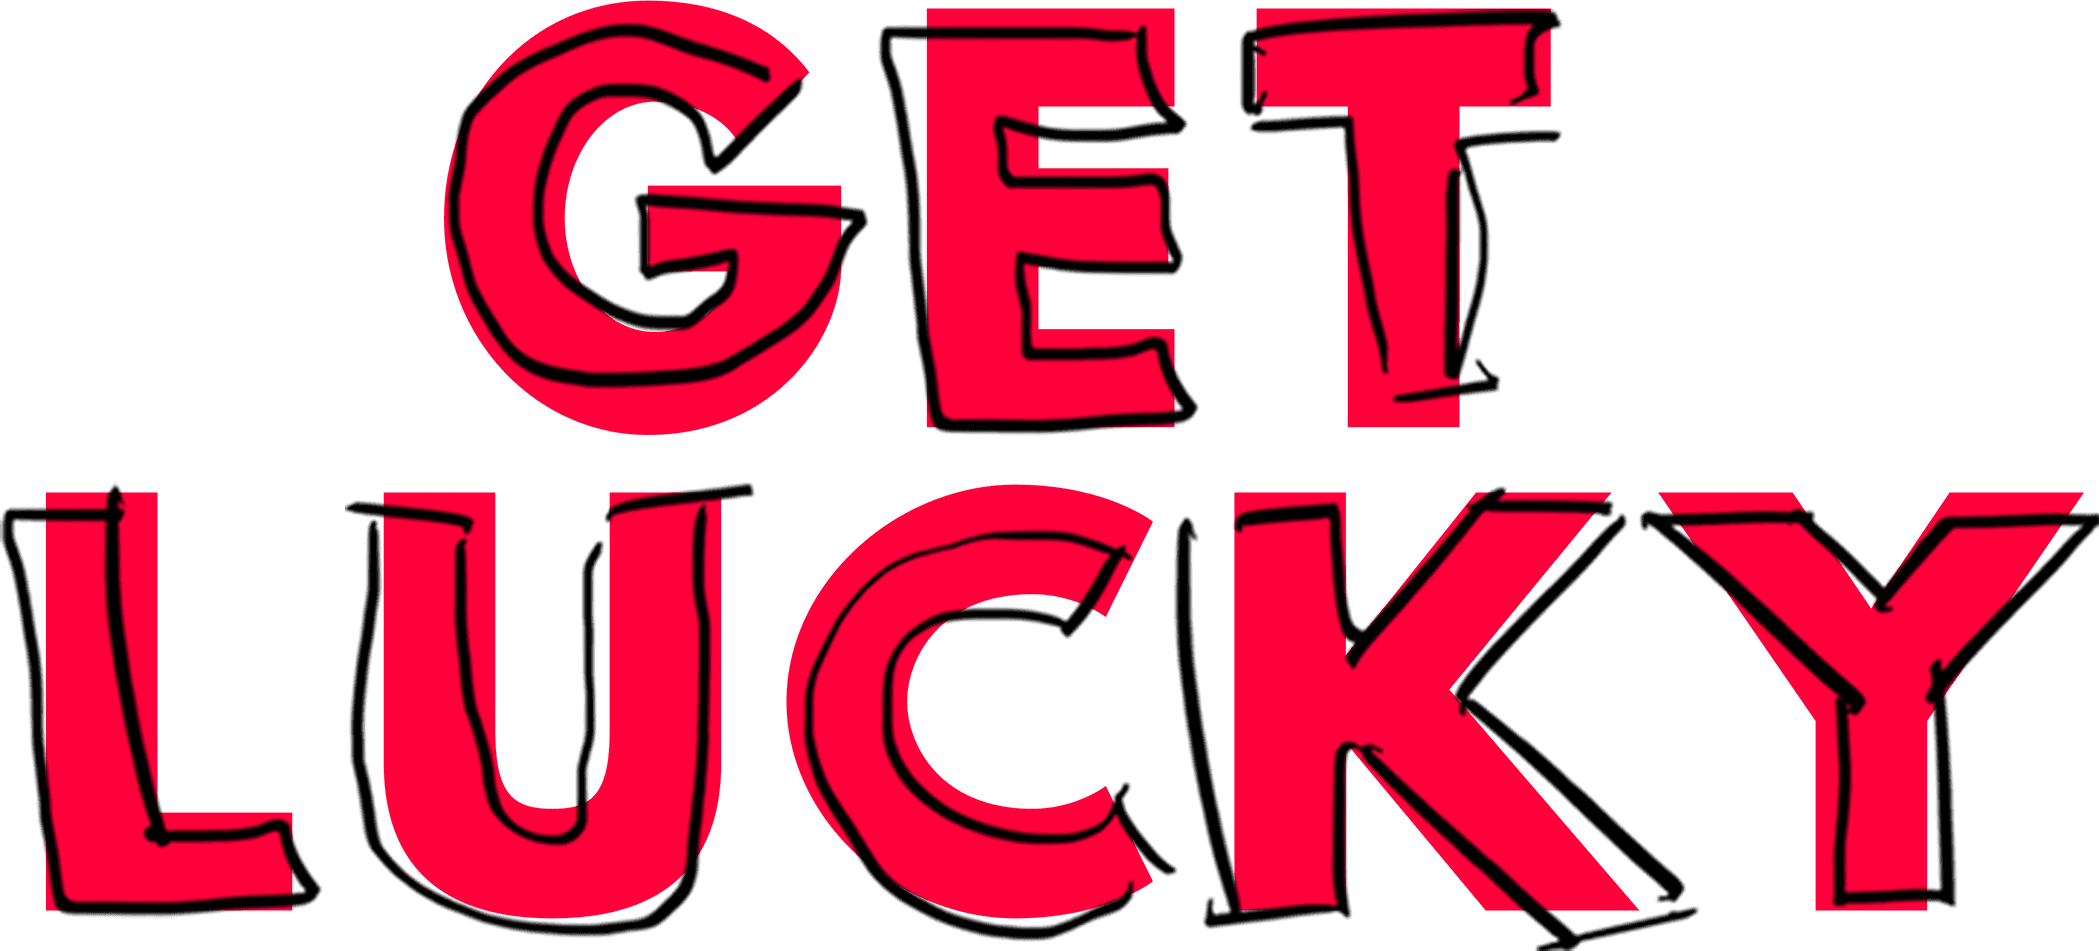 Get Lucky logo